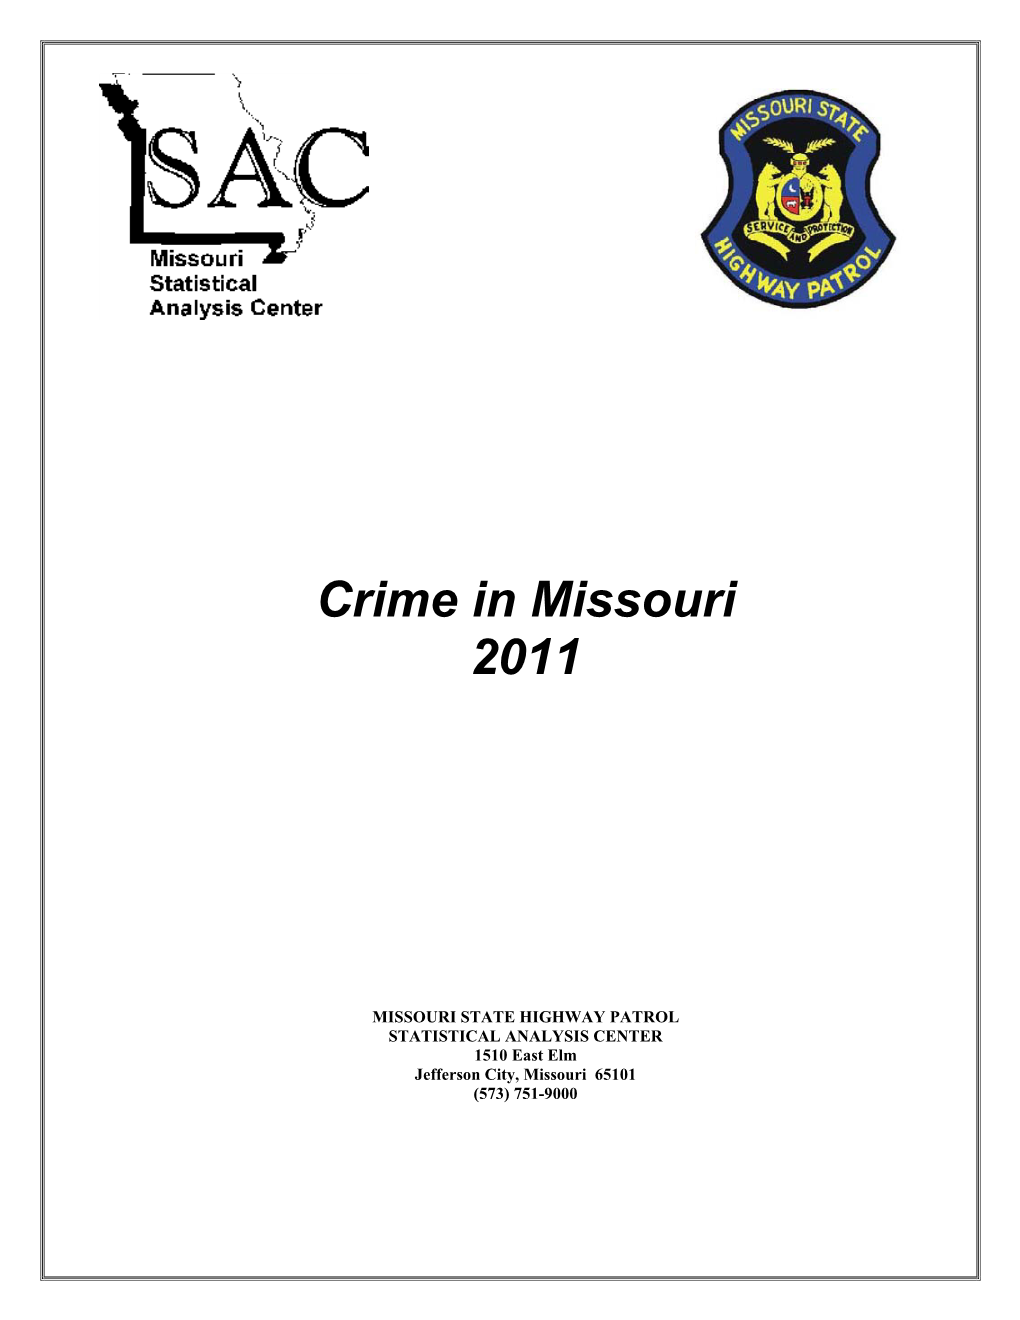 Crime in Missouri 2011